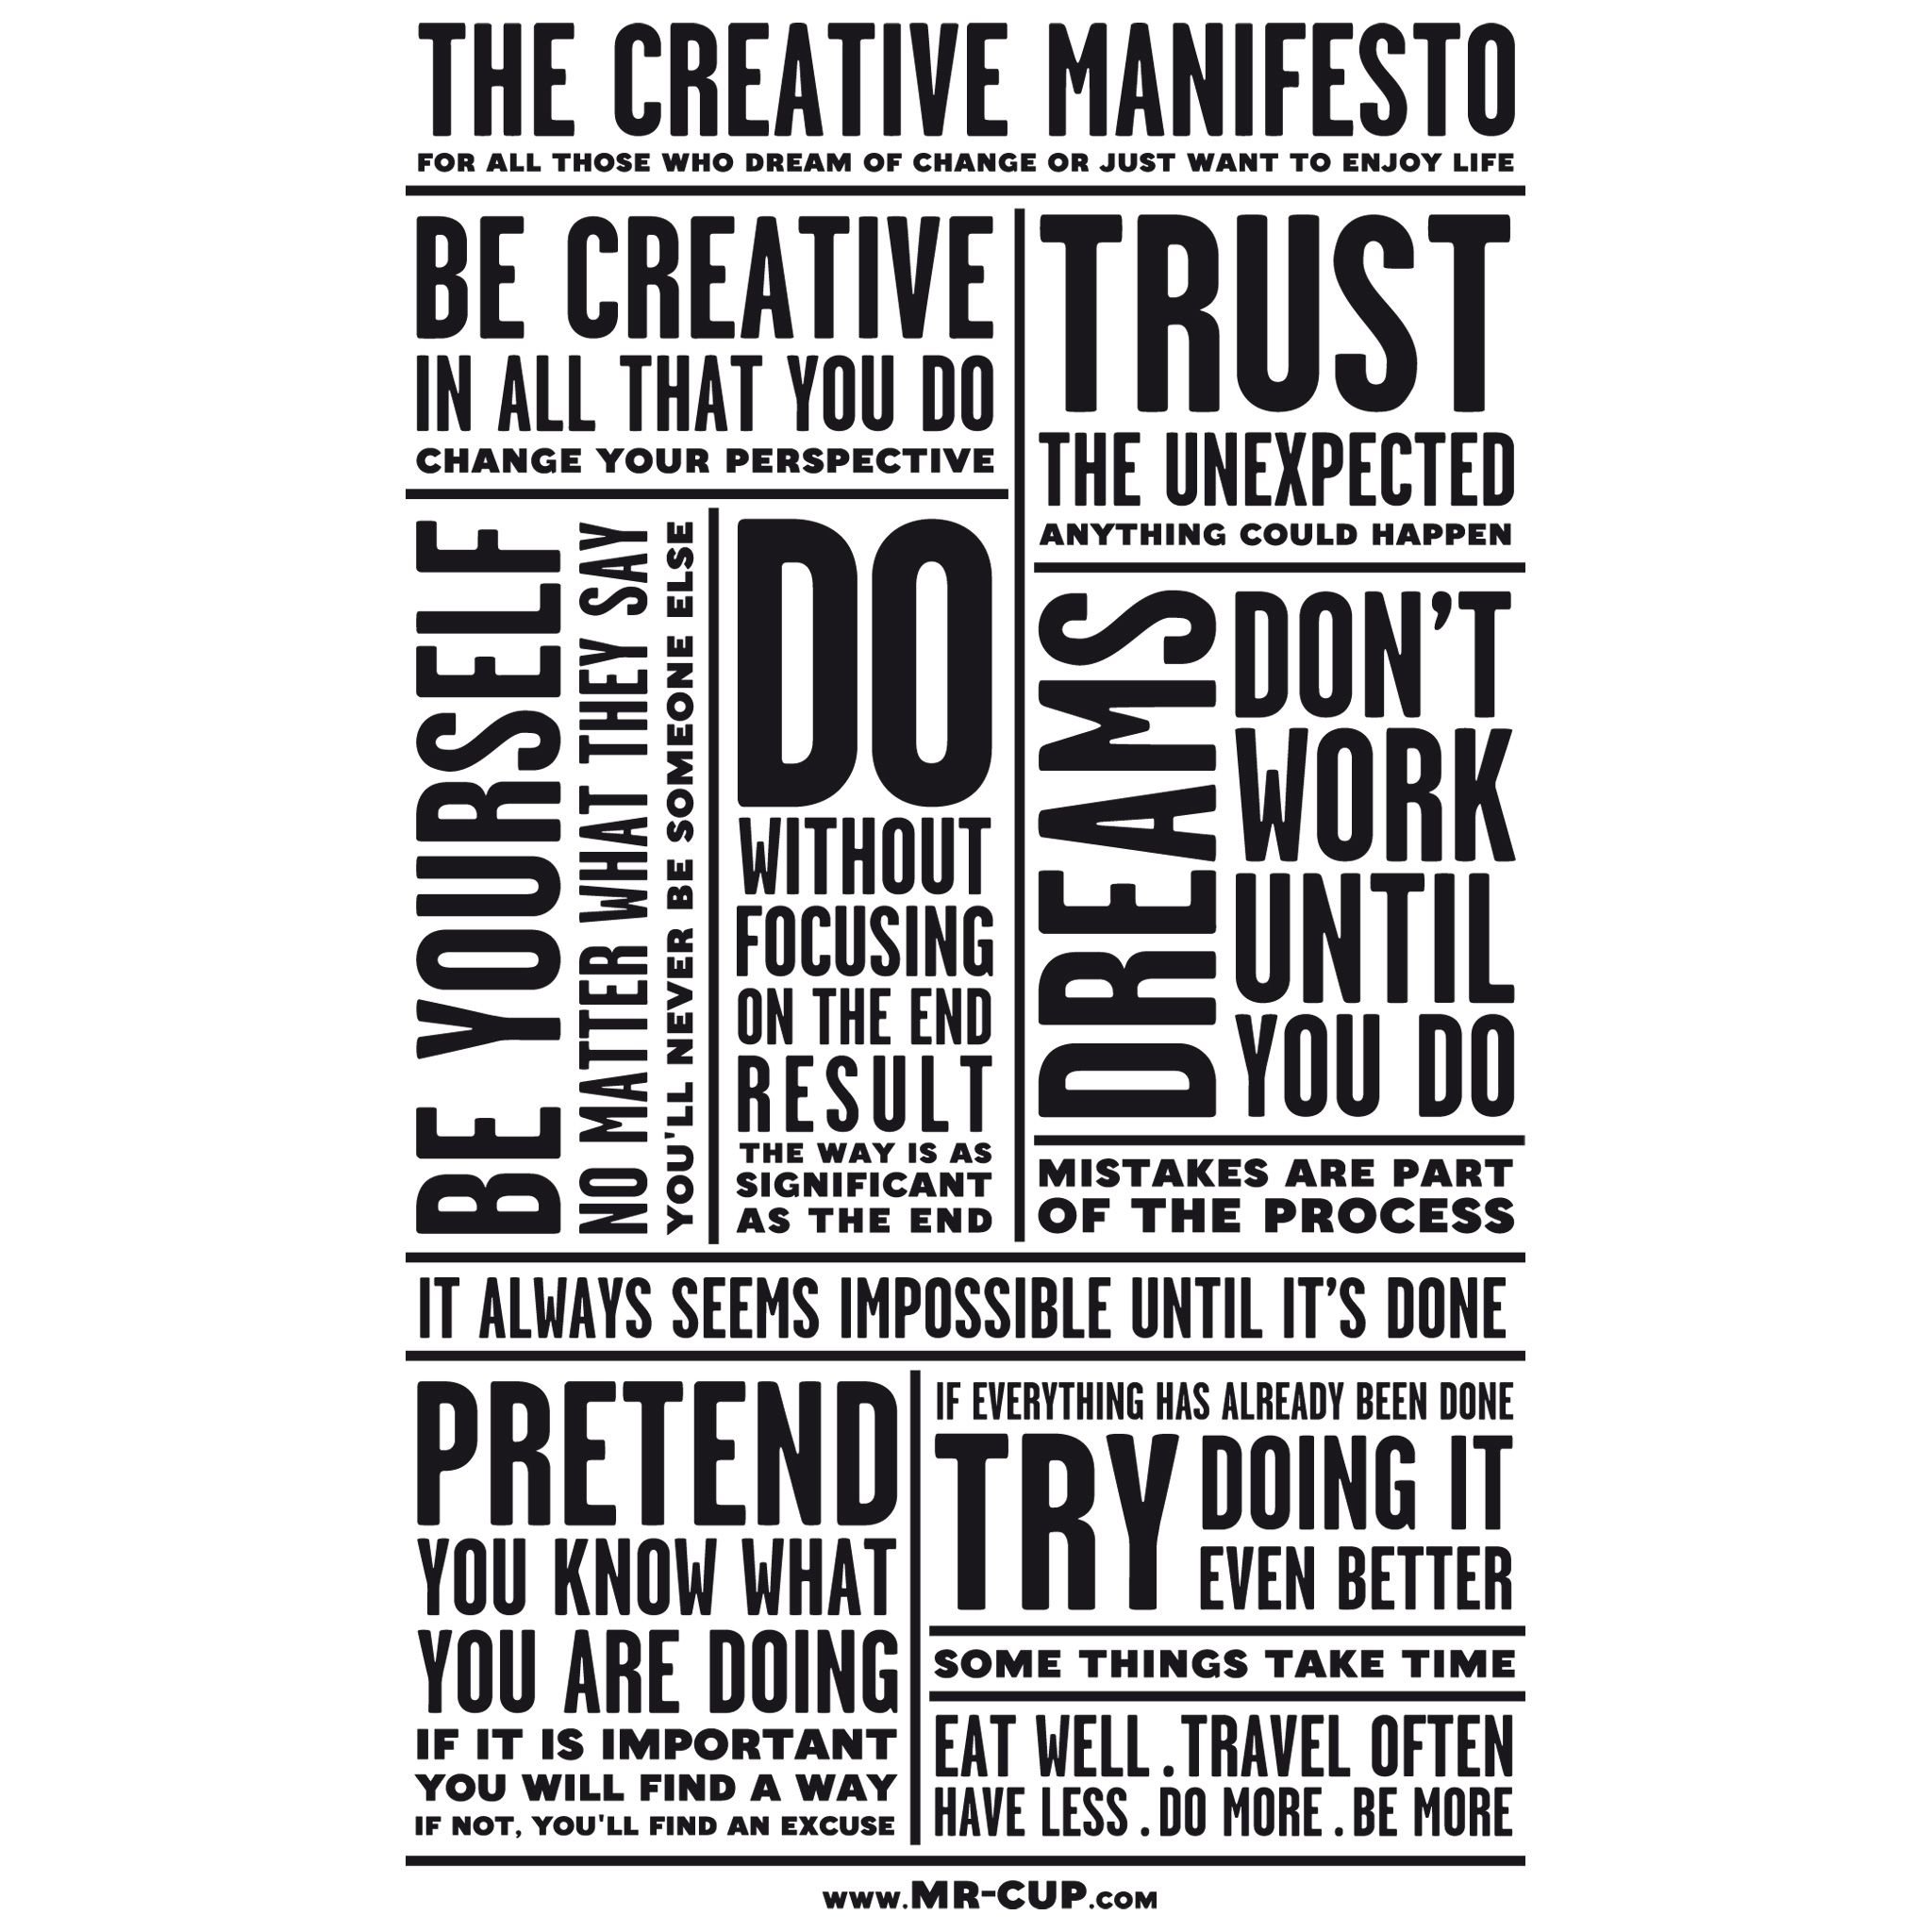 Как оформить Манифест креативно